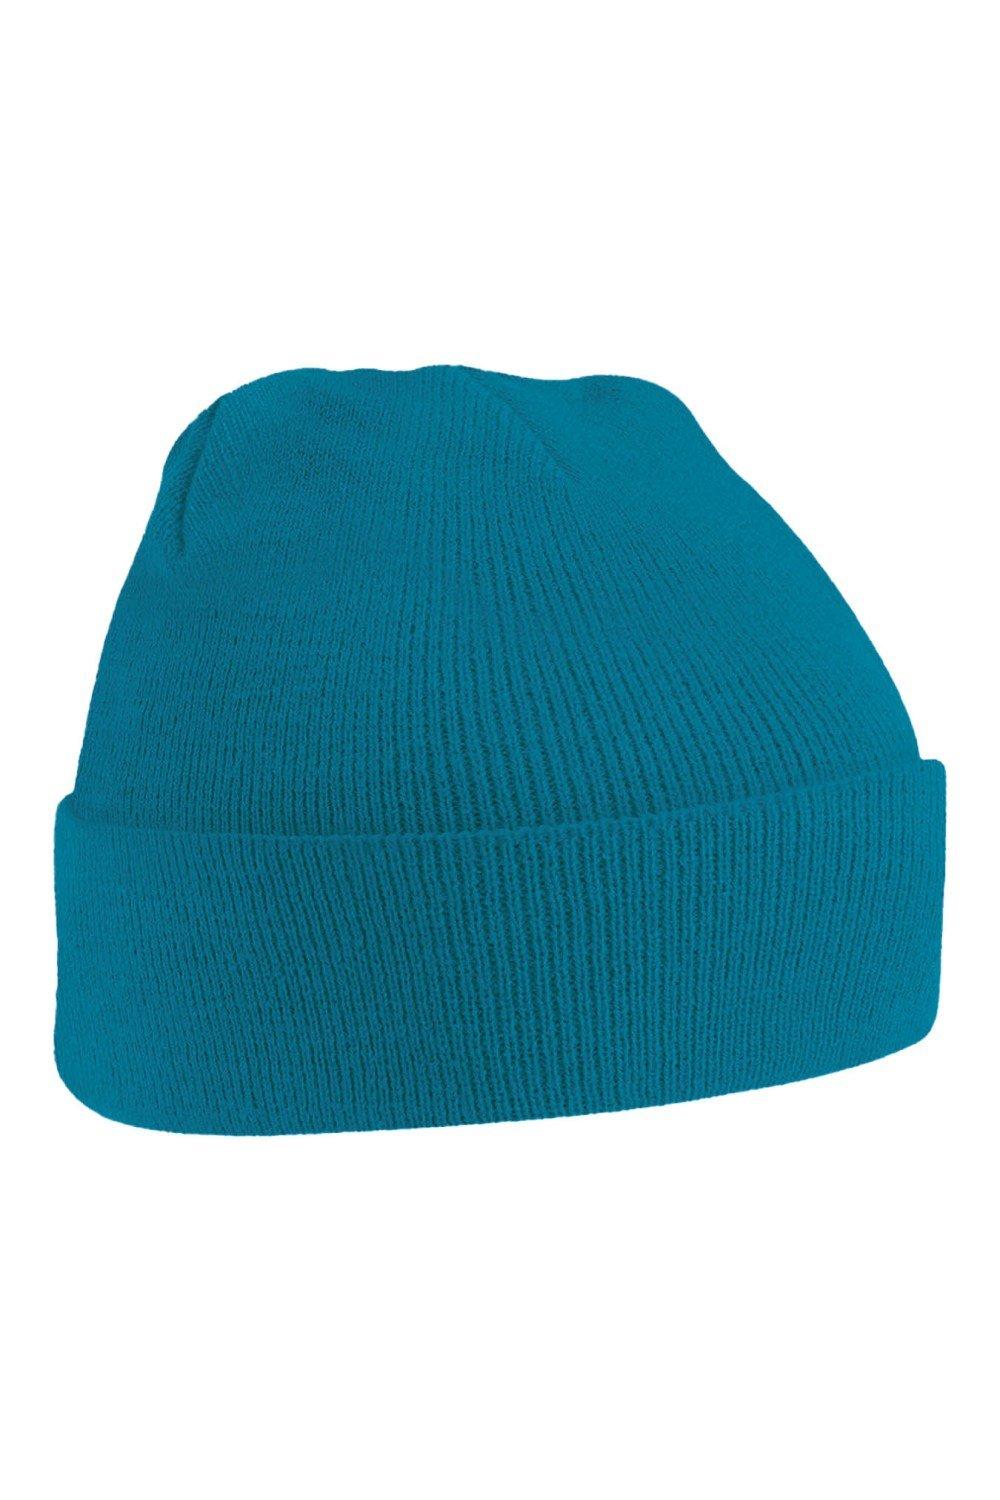 Оригинальная зимняя шапка-бини с манжетами Beechfield, синий шапка ушанка зимняя р58 цв лес трикотаж мембрана ут и мех